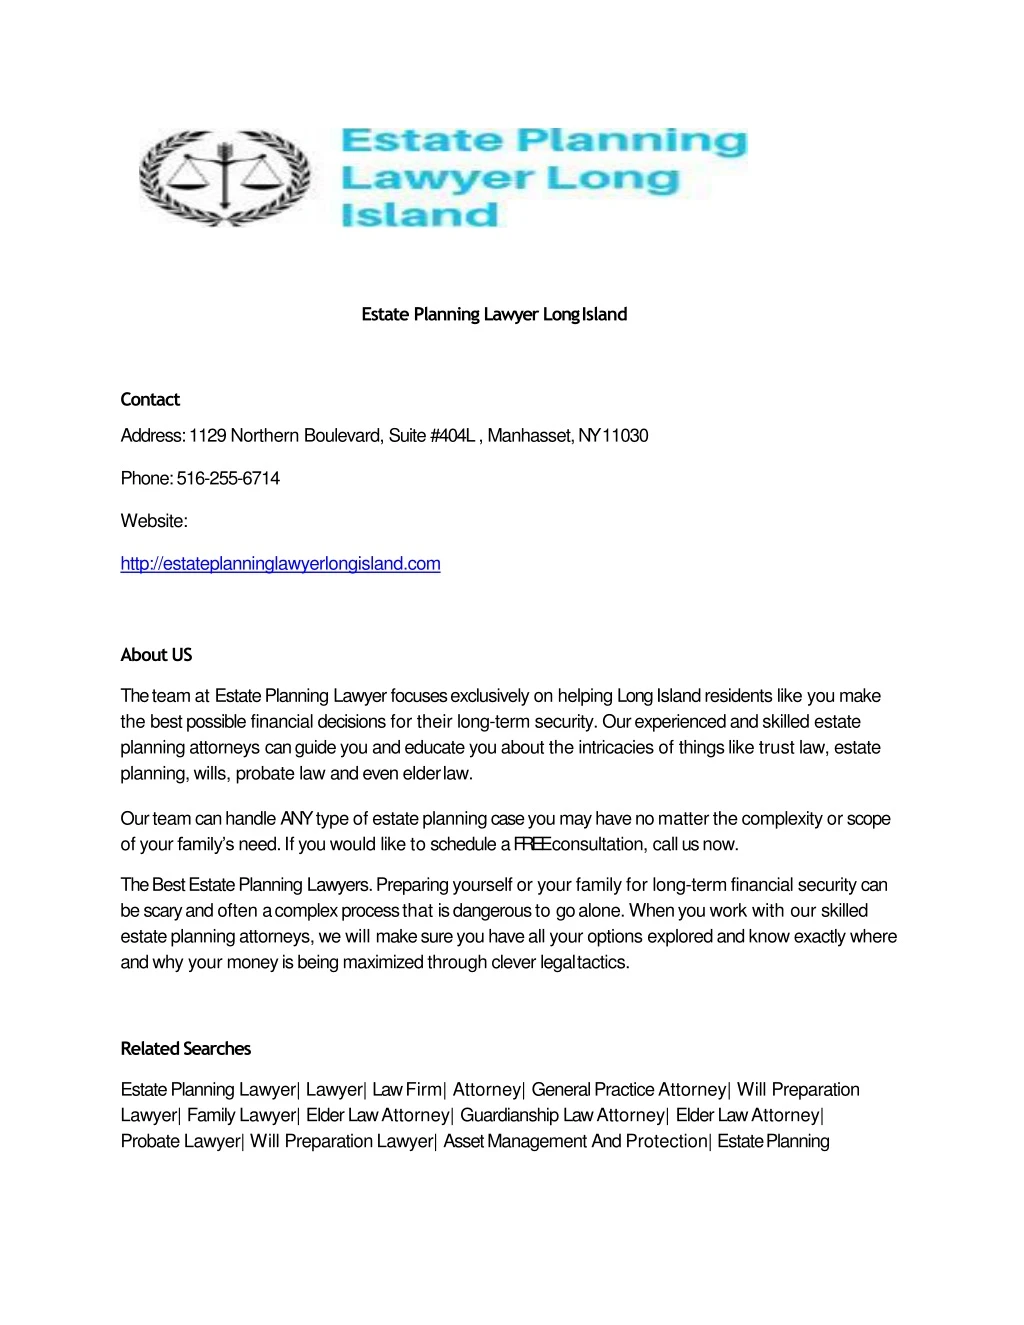 estate planning lawyer long island